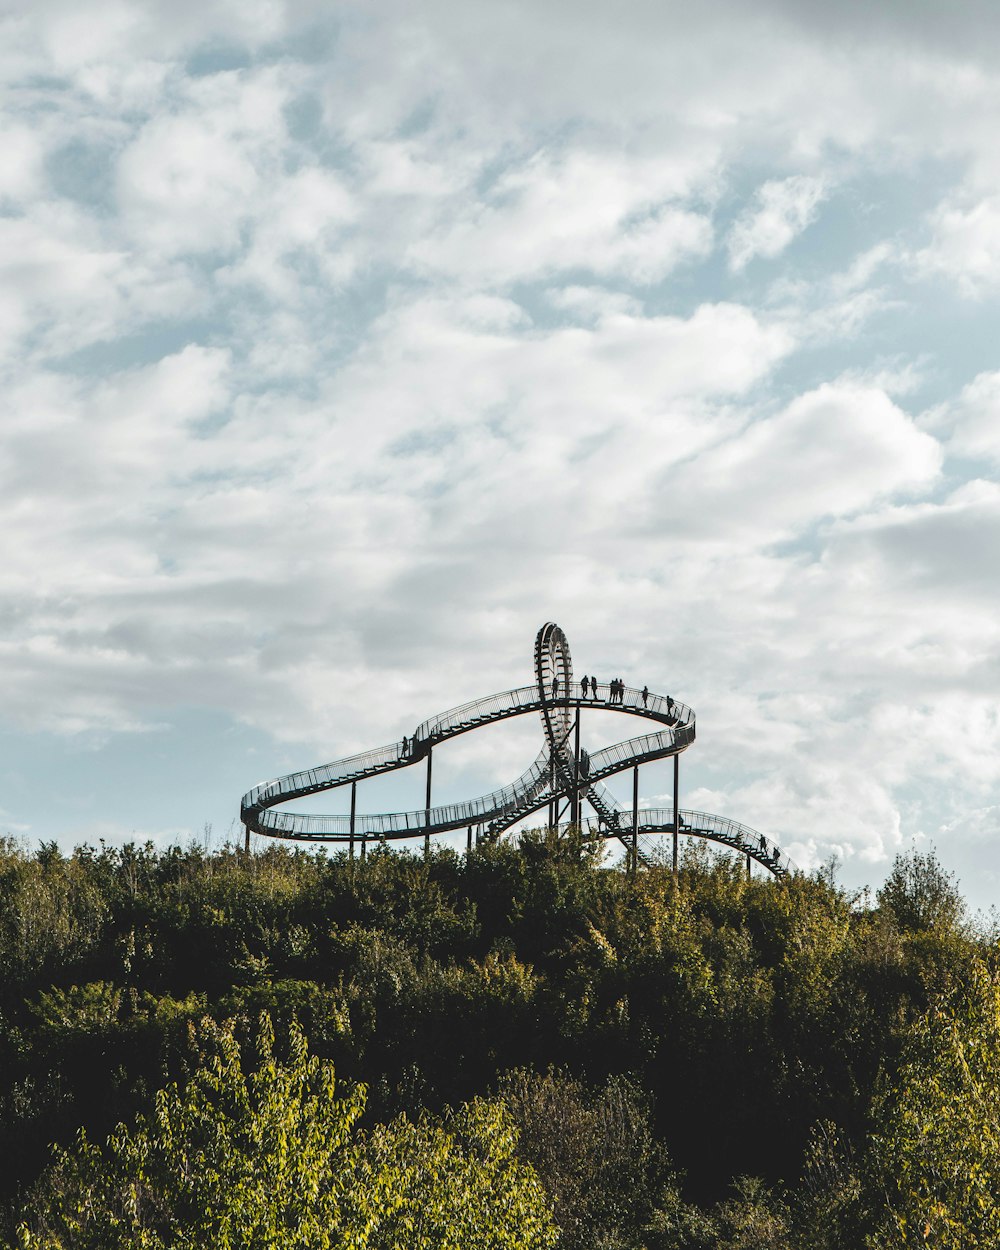 a roller coaster in a field